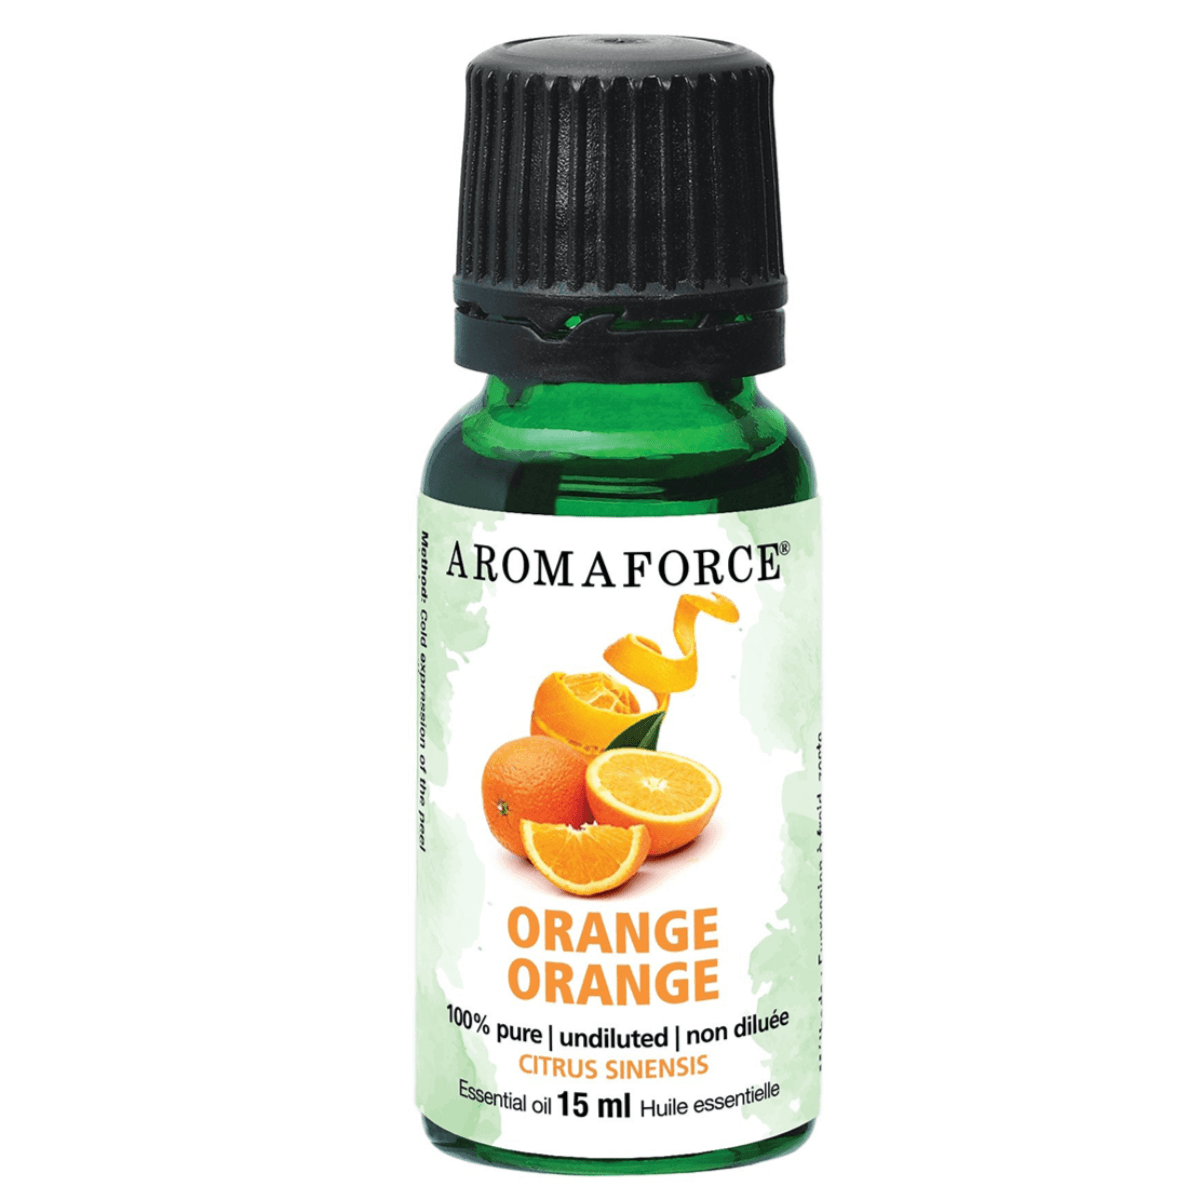 Aromaforce Essential Oil Orange 15mL Essential Oils at Village Vitamin Store